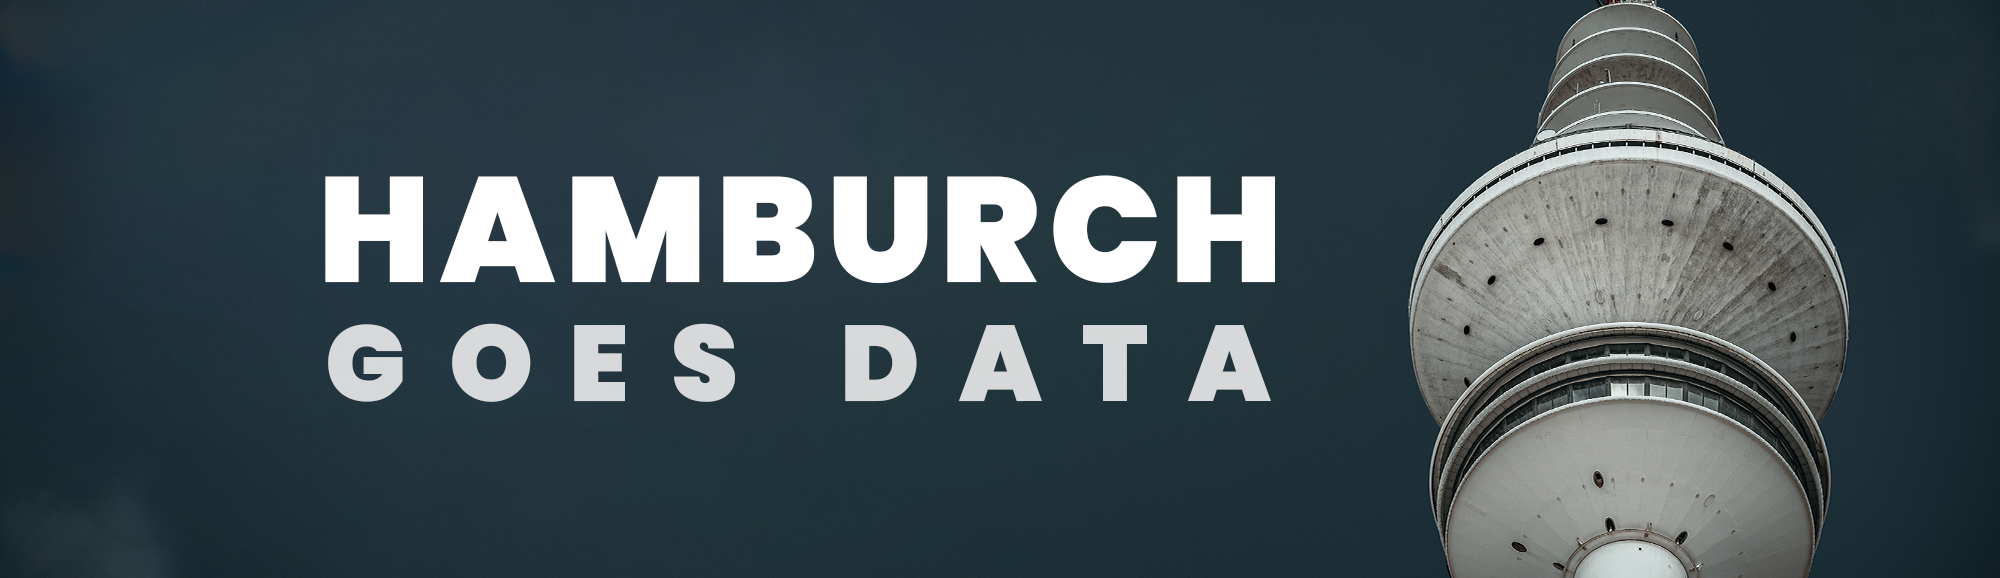 Hamburch Goes Data